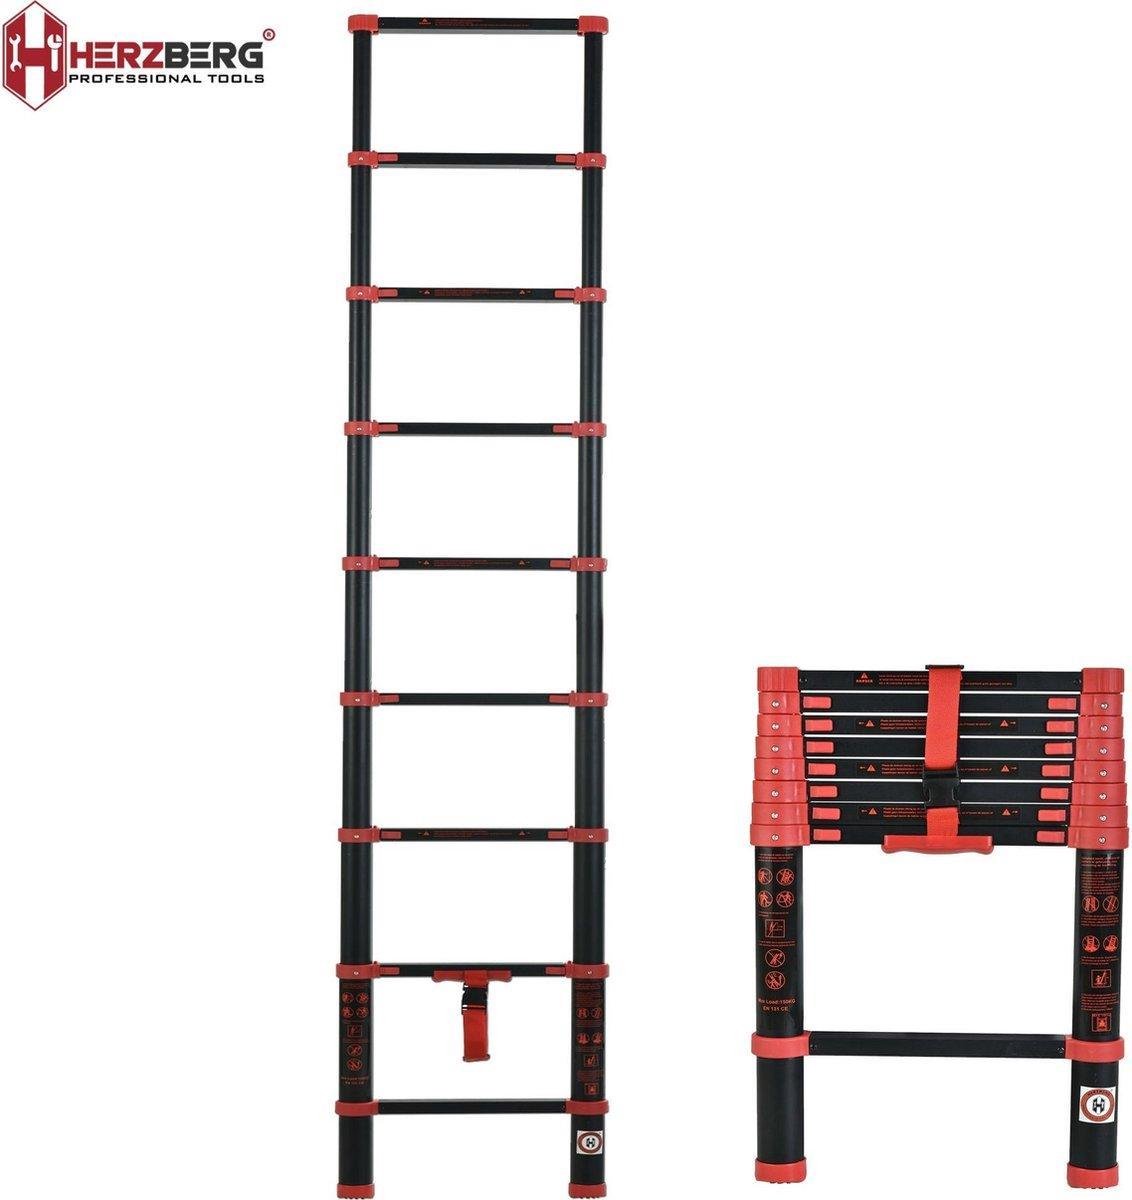 Herzberg telescopische ladder 2,6 meter - HG-BK260 - telescoop ladder -  rood zwart | bol.com